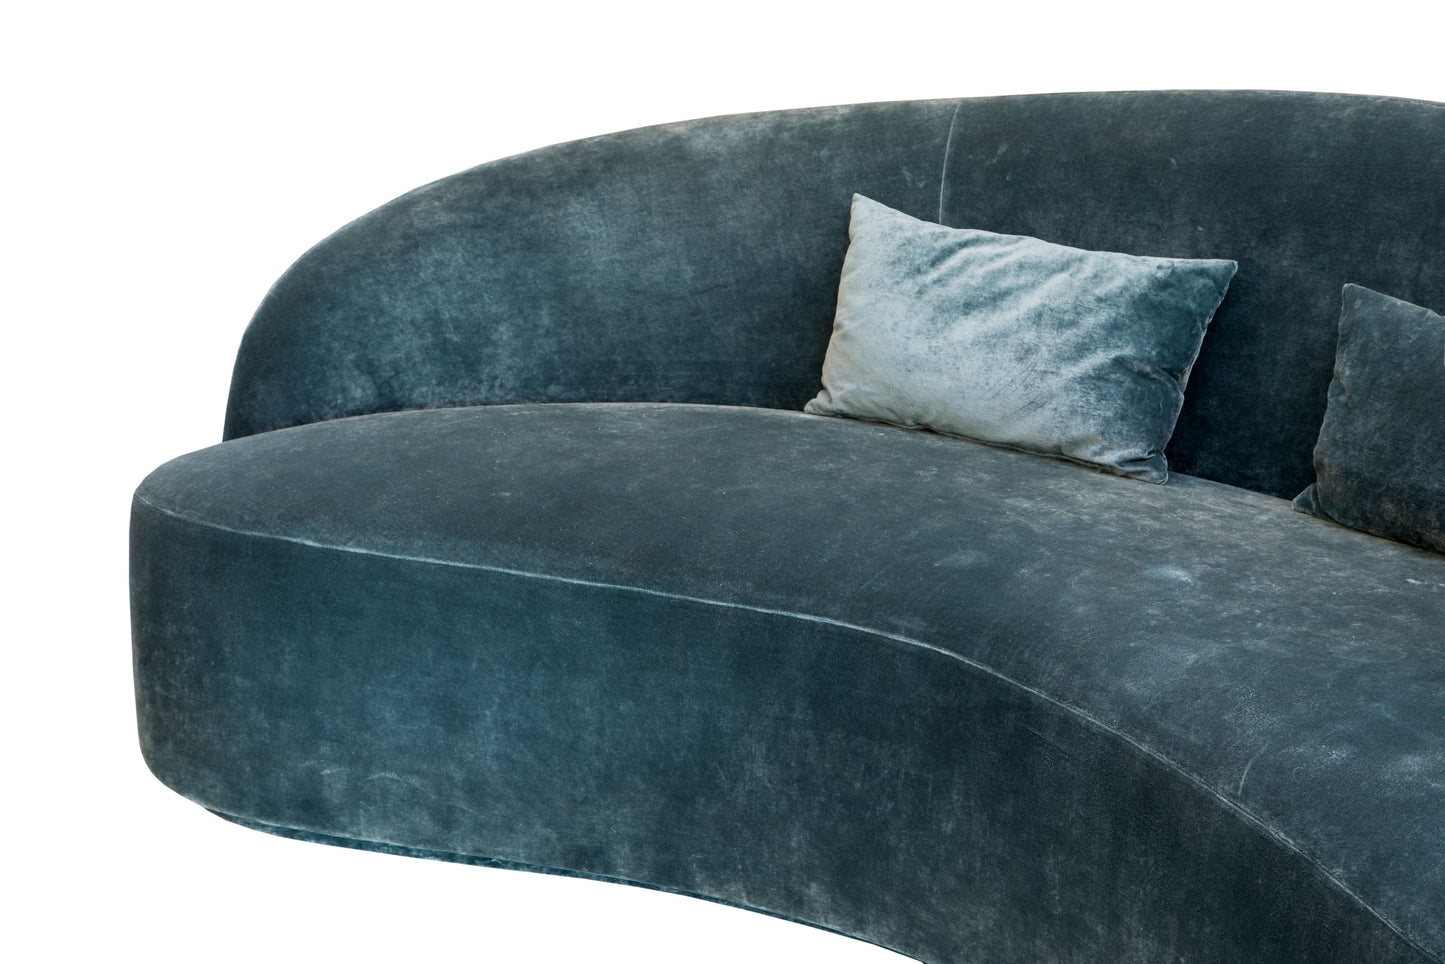 Ico Parisi style curved sofa